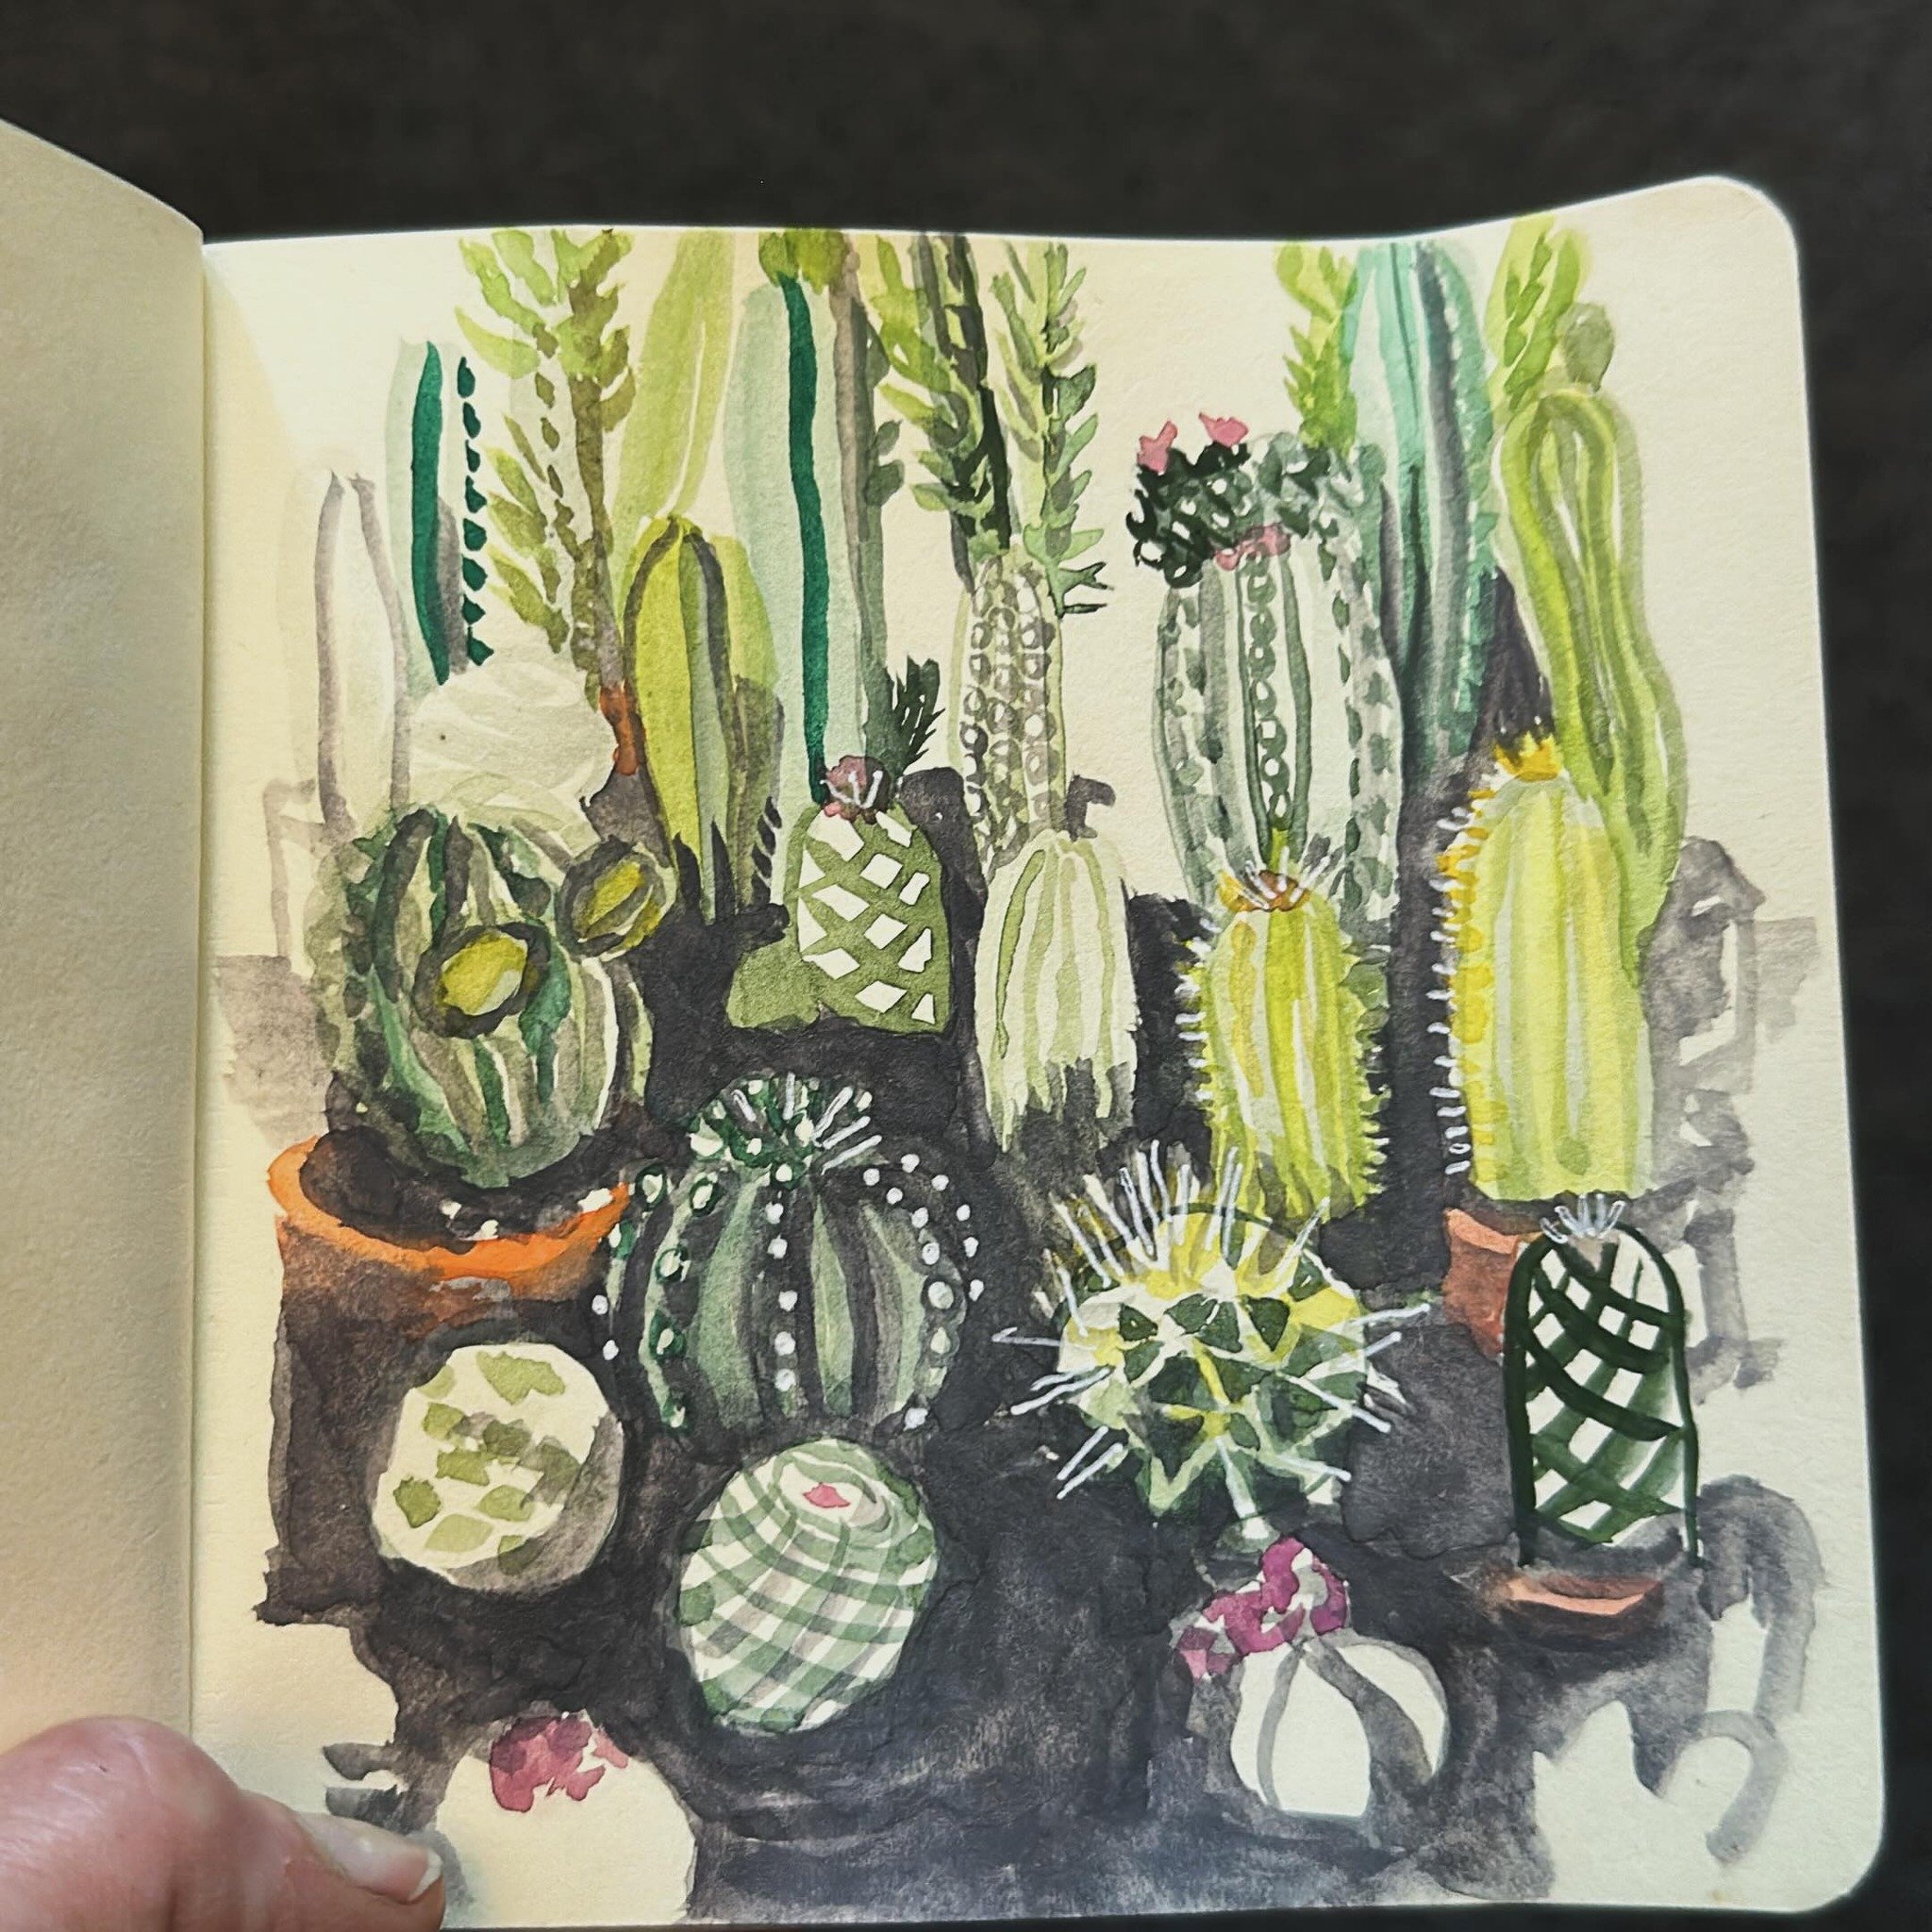 Midnight cactus 
.
.
.
#sketchbook #watercolorsketch #artforyourhome #workingartist #cactuscollection #cactuslover